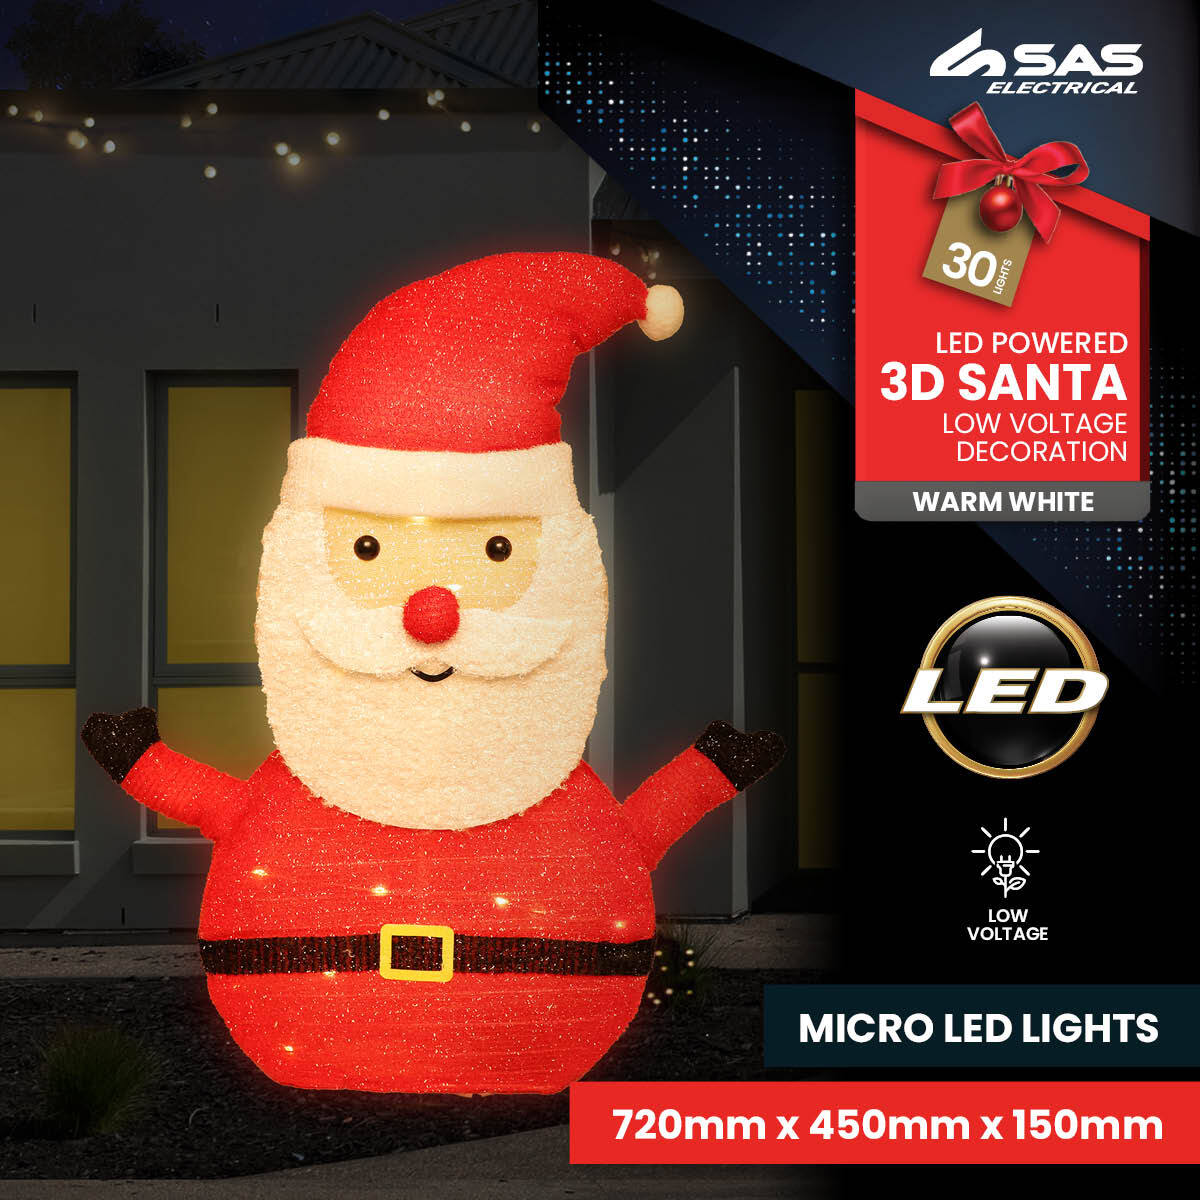 SAS Electrical 45 x 72cm 3D Santa Ornament Warm White LED Lighting Deals499